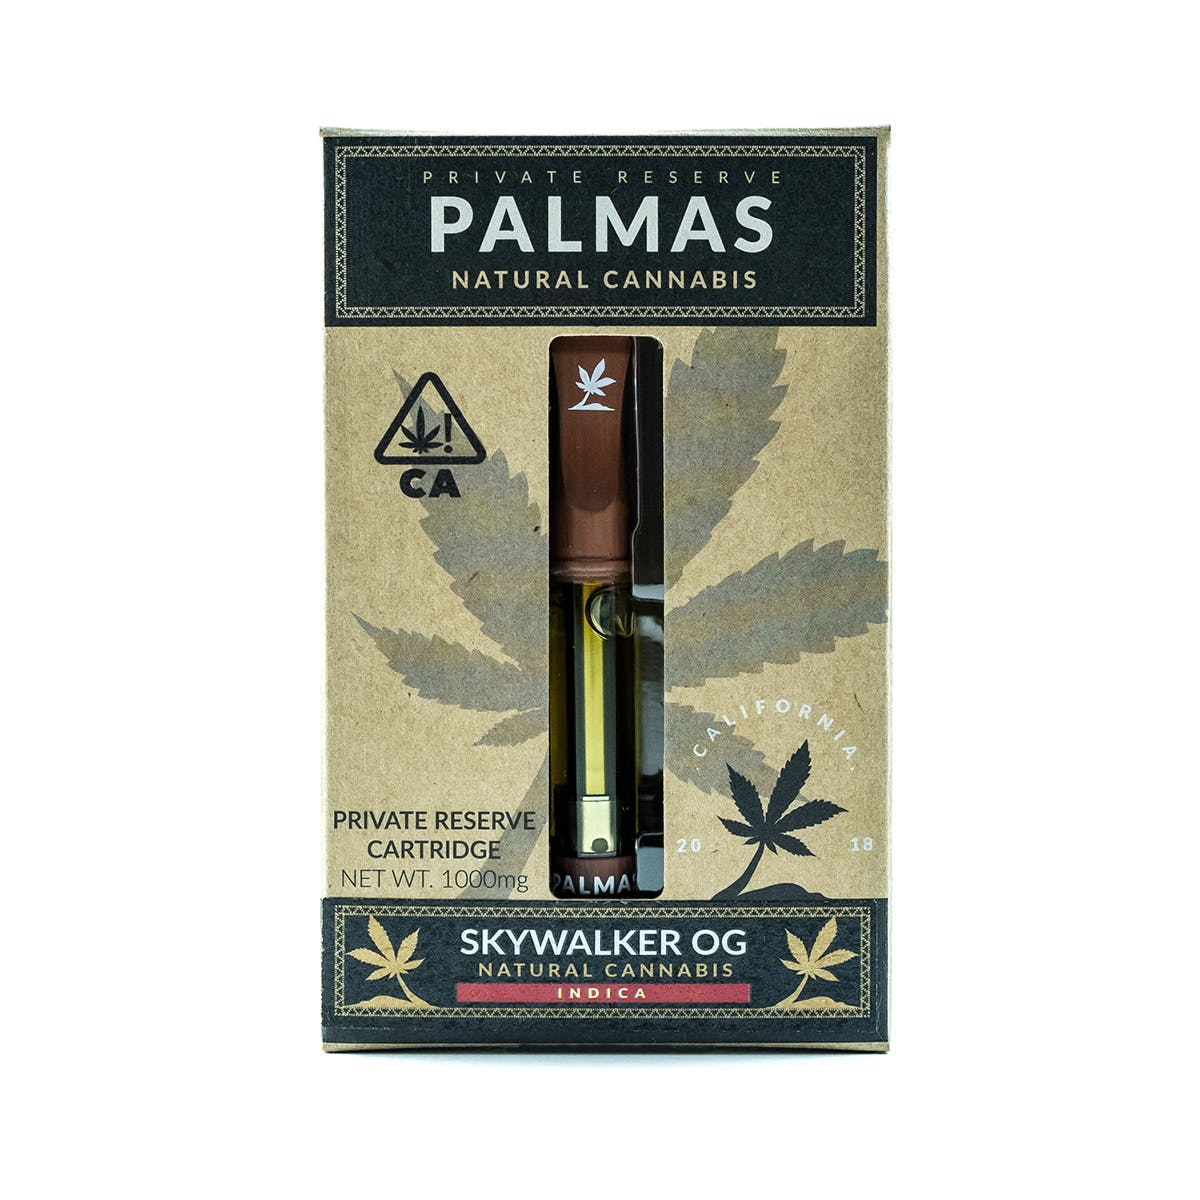 marijuana-dispensaries-firestone-20-cap-in-los-angeles-palmas-private-reserve-cartridge-skywalker-og